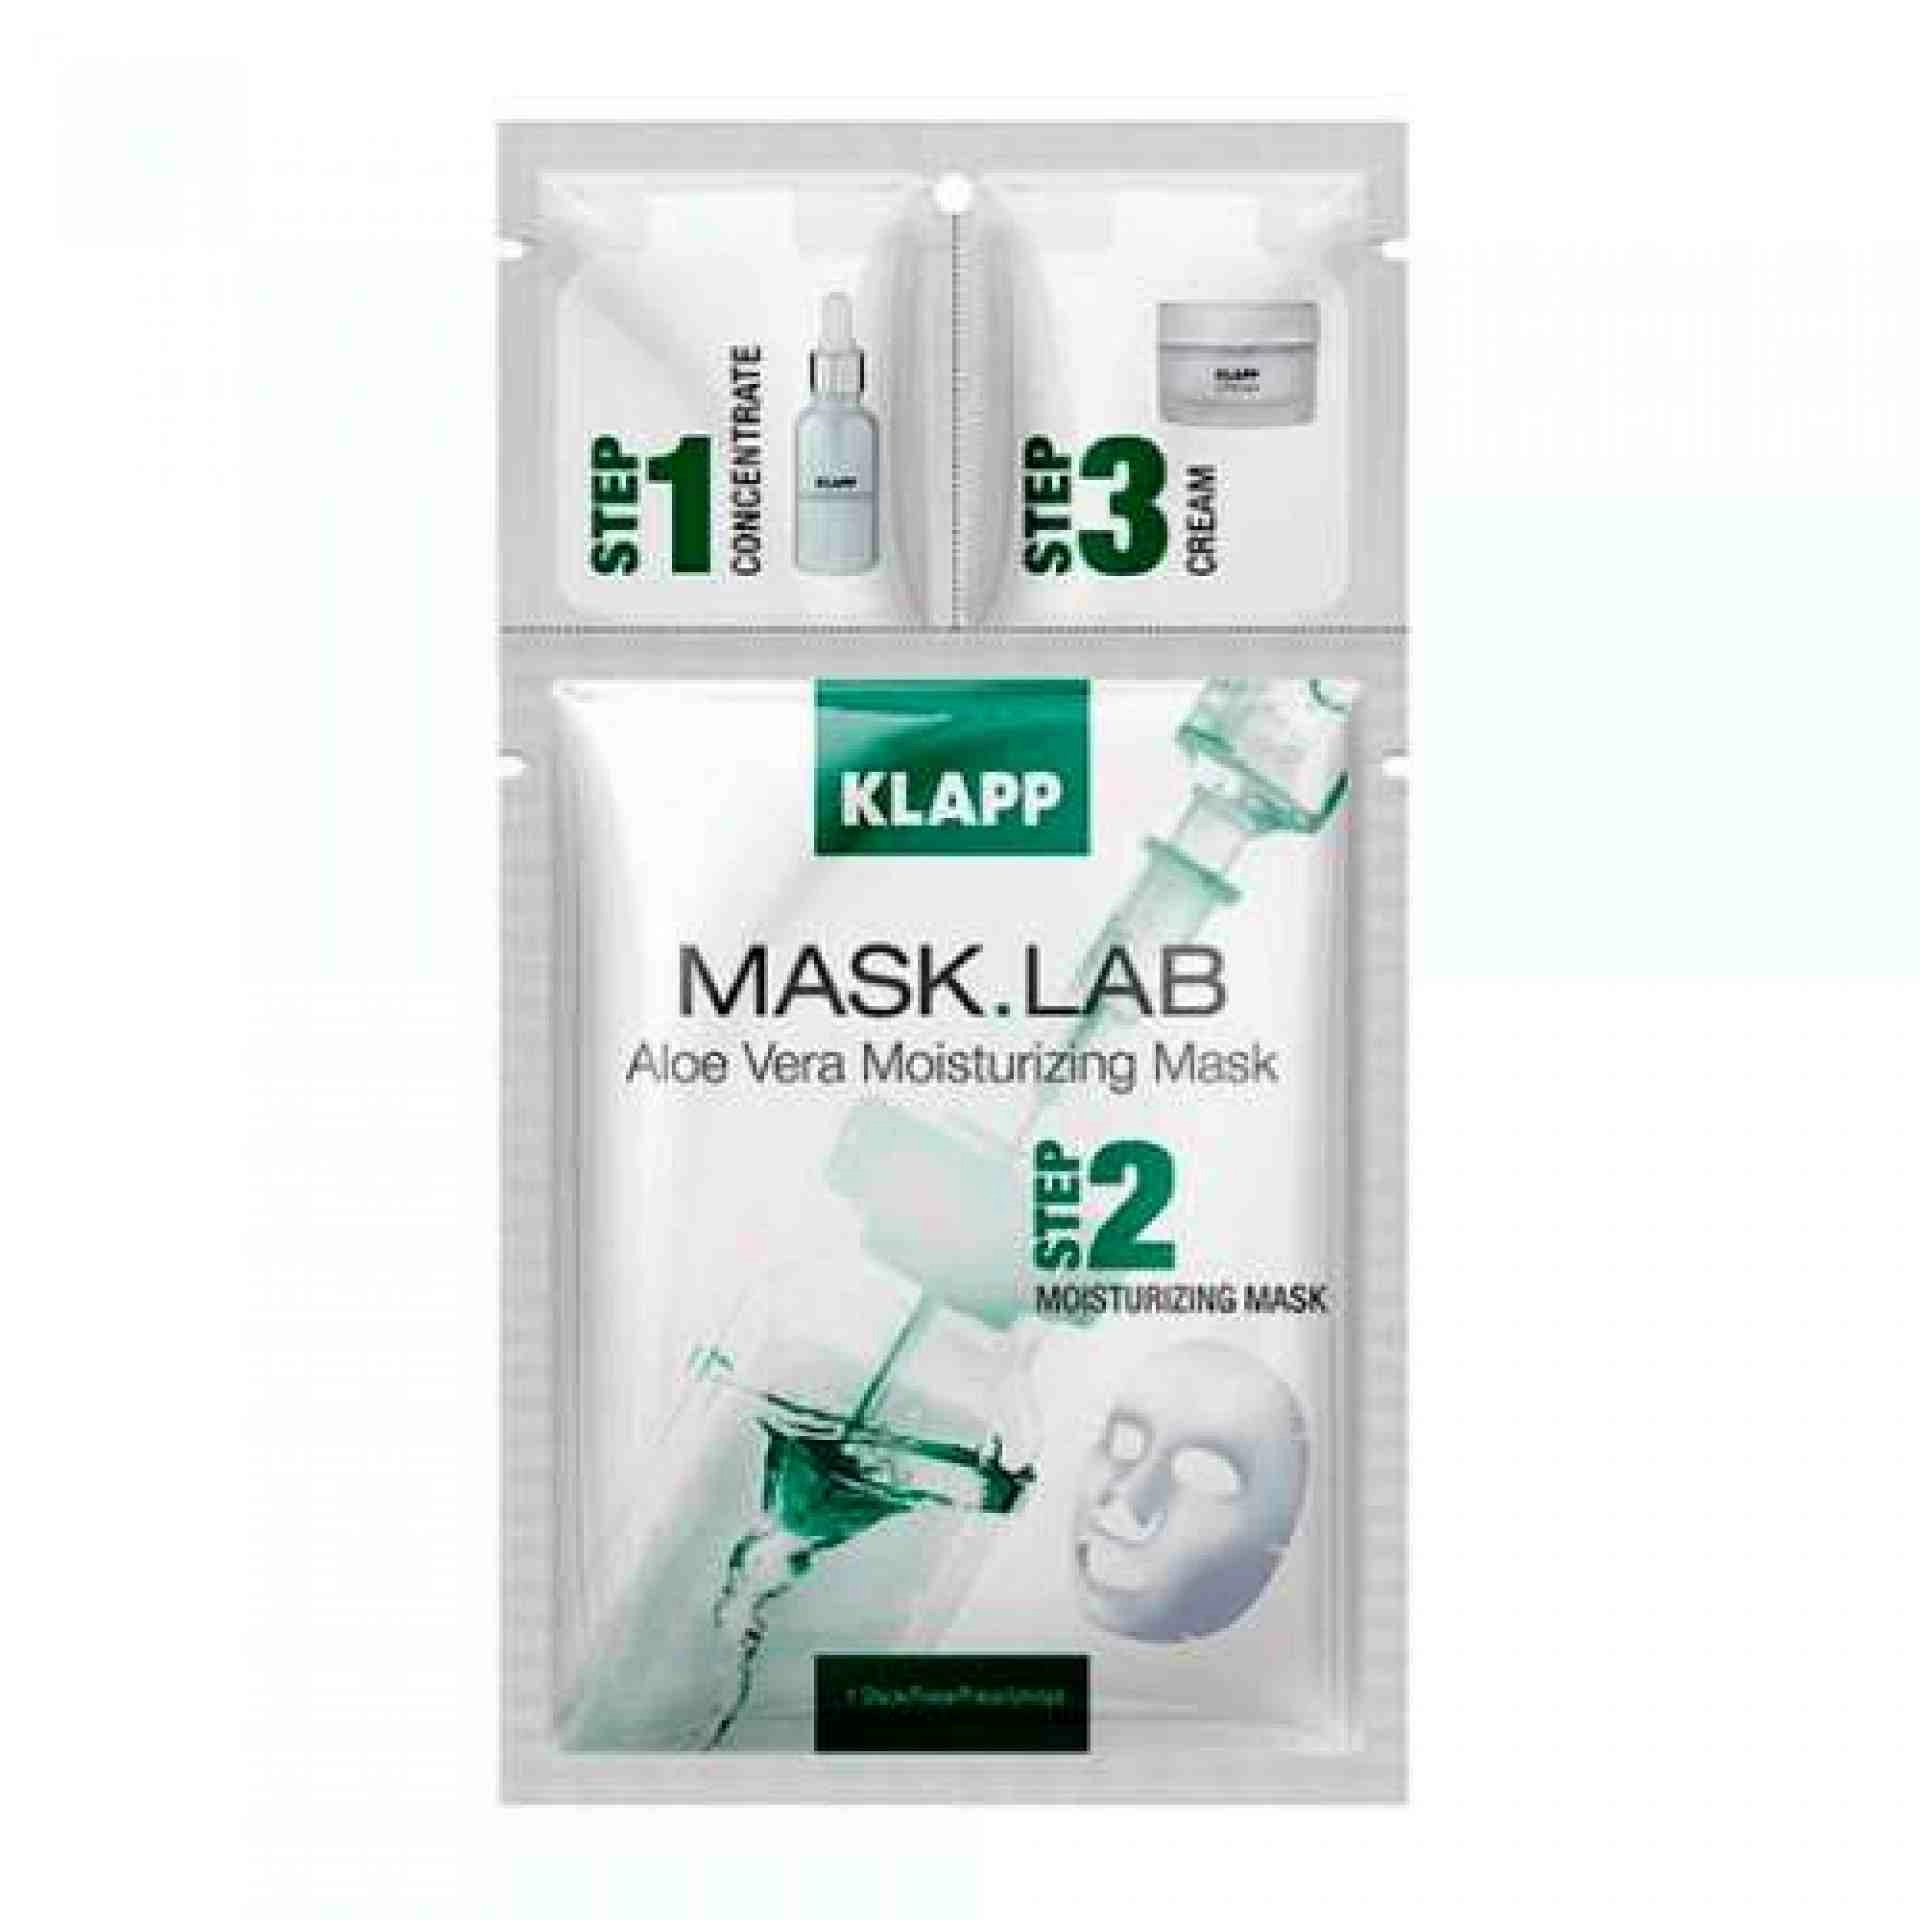 Aloe Vera Moisturizing Mask | Tratamiento Calmante 1 unidad - Mask Lab - Klapp ®